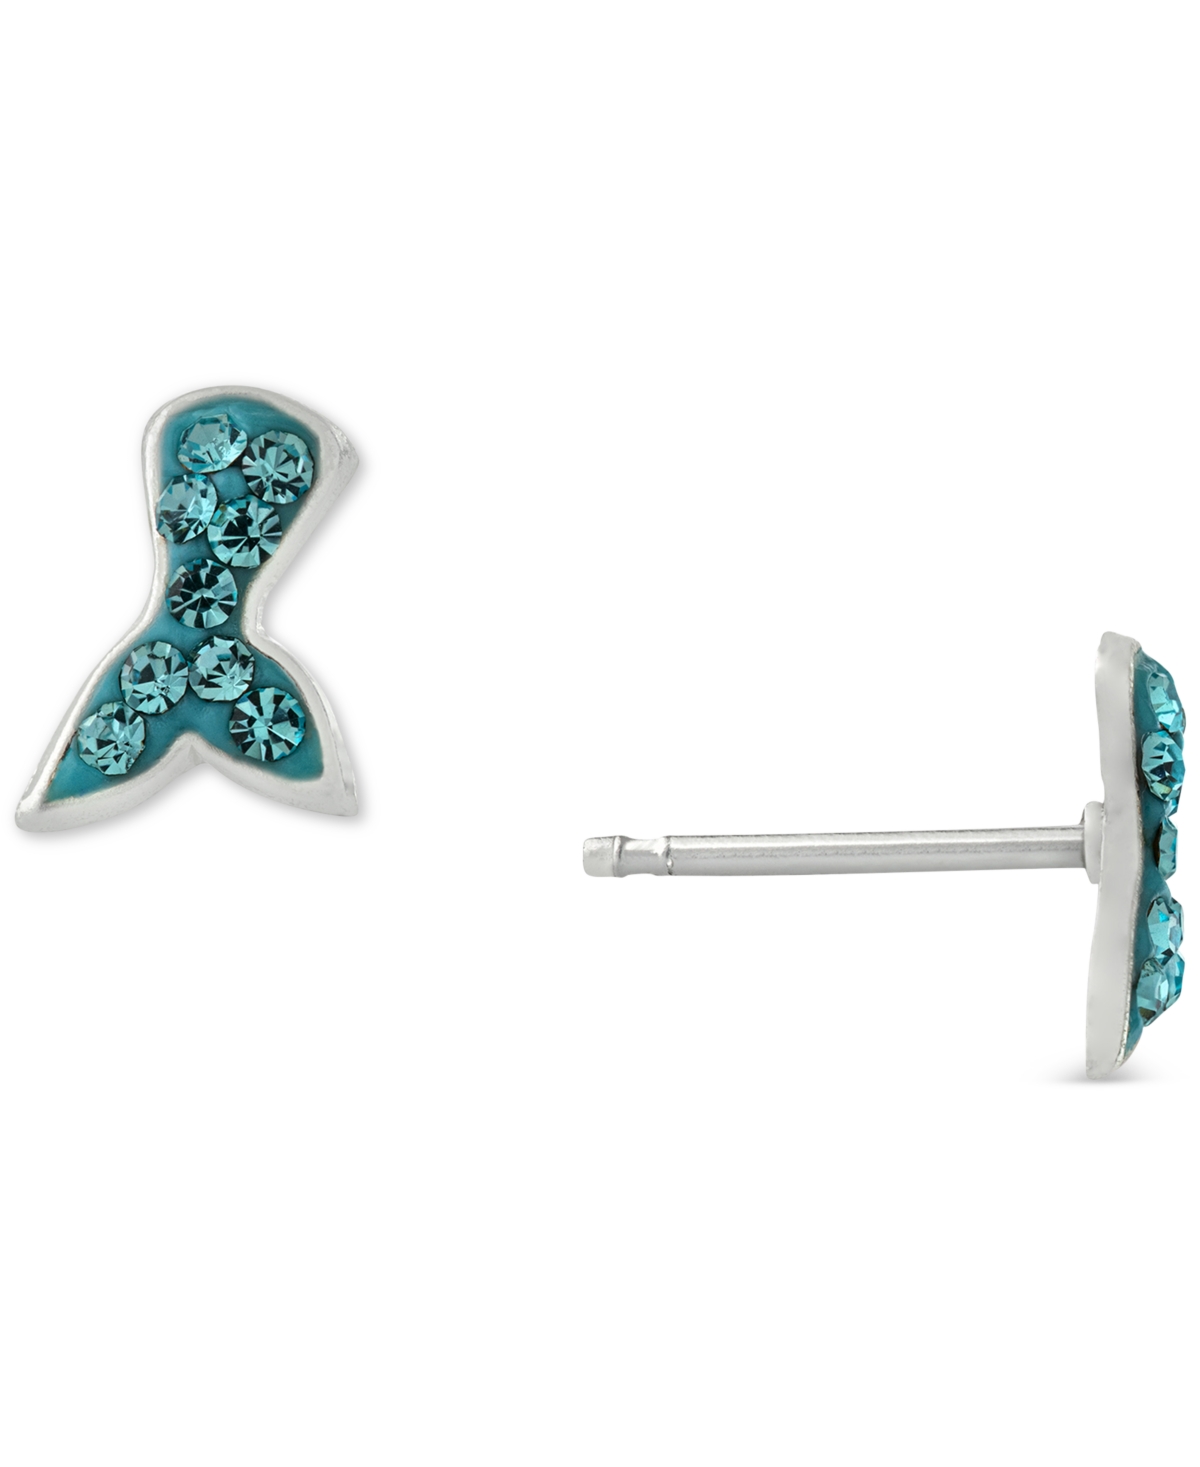 Crystal Mermaid Tail Stud Earrings in Sterling Silver, Created for Macy's - Sterling Silver